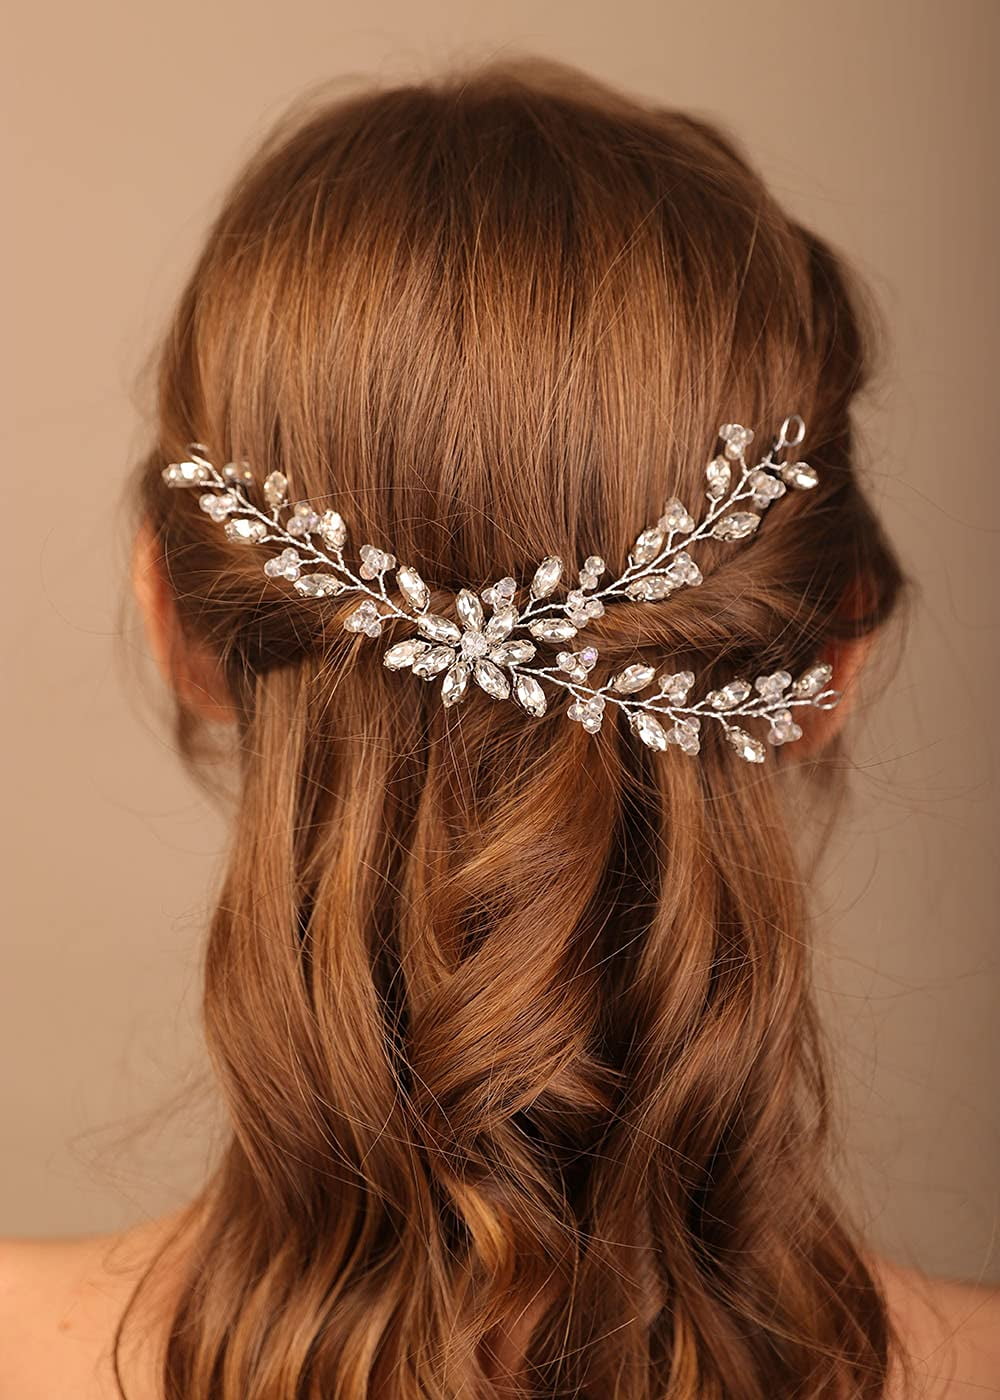 Simsly Bride Crystal Wedding Hair Vine Silver Bridal Headpiece Wedding Headband Hair Accessoriesfor Women and Girls 